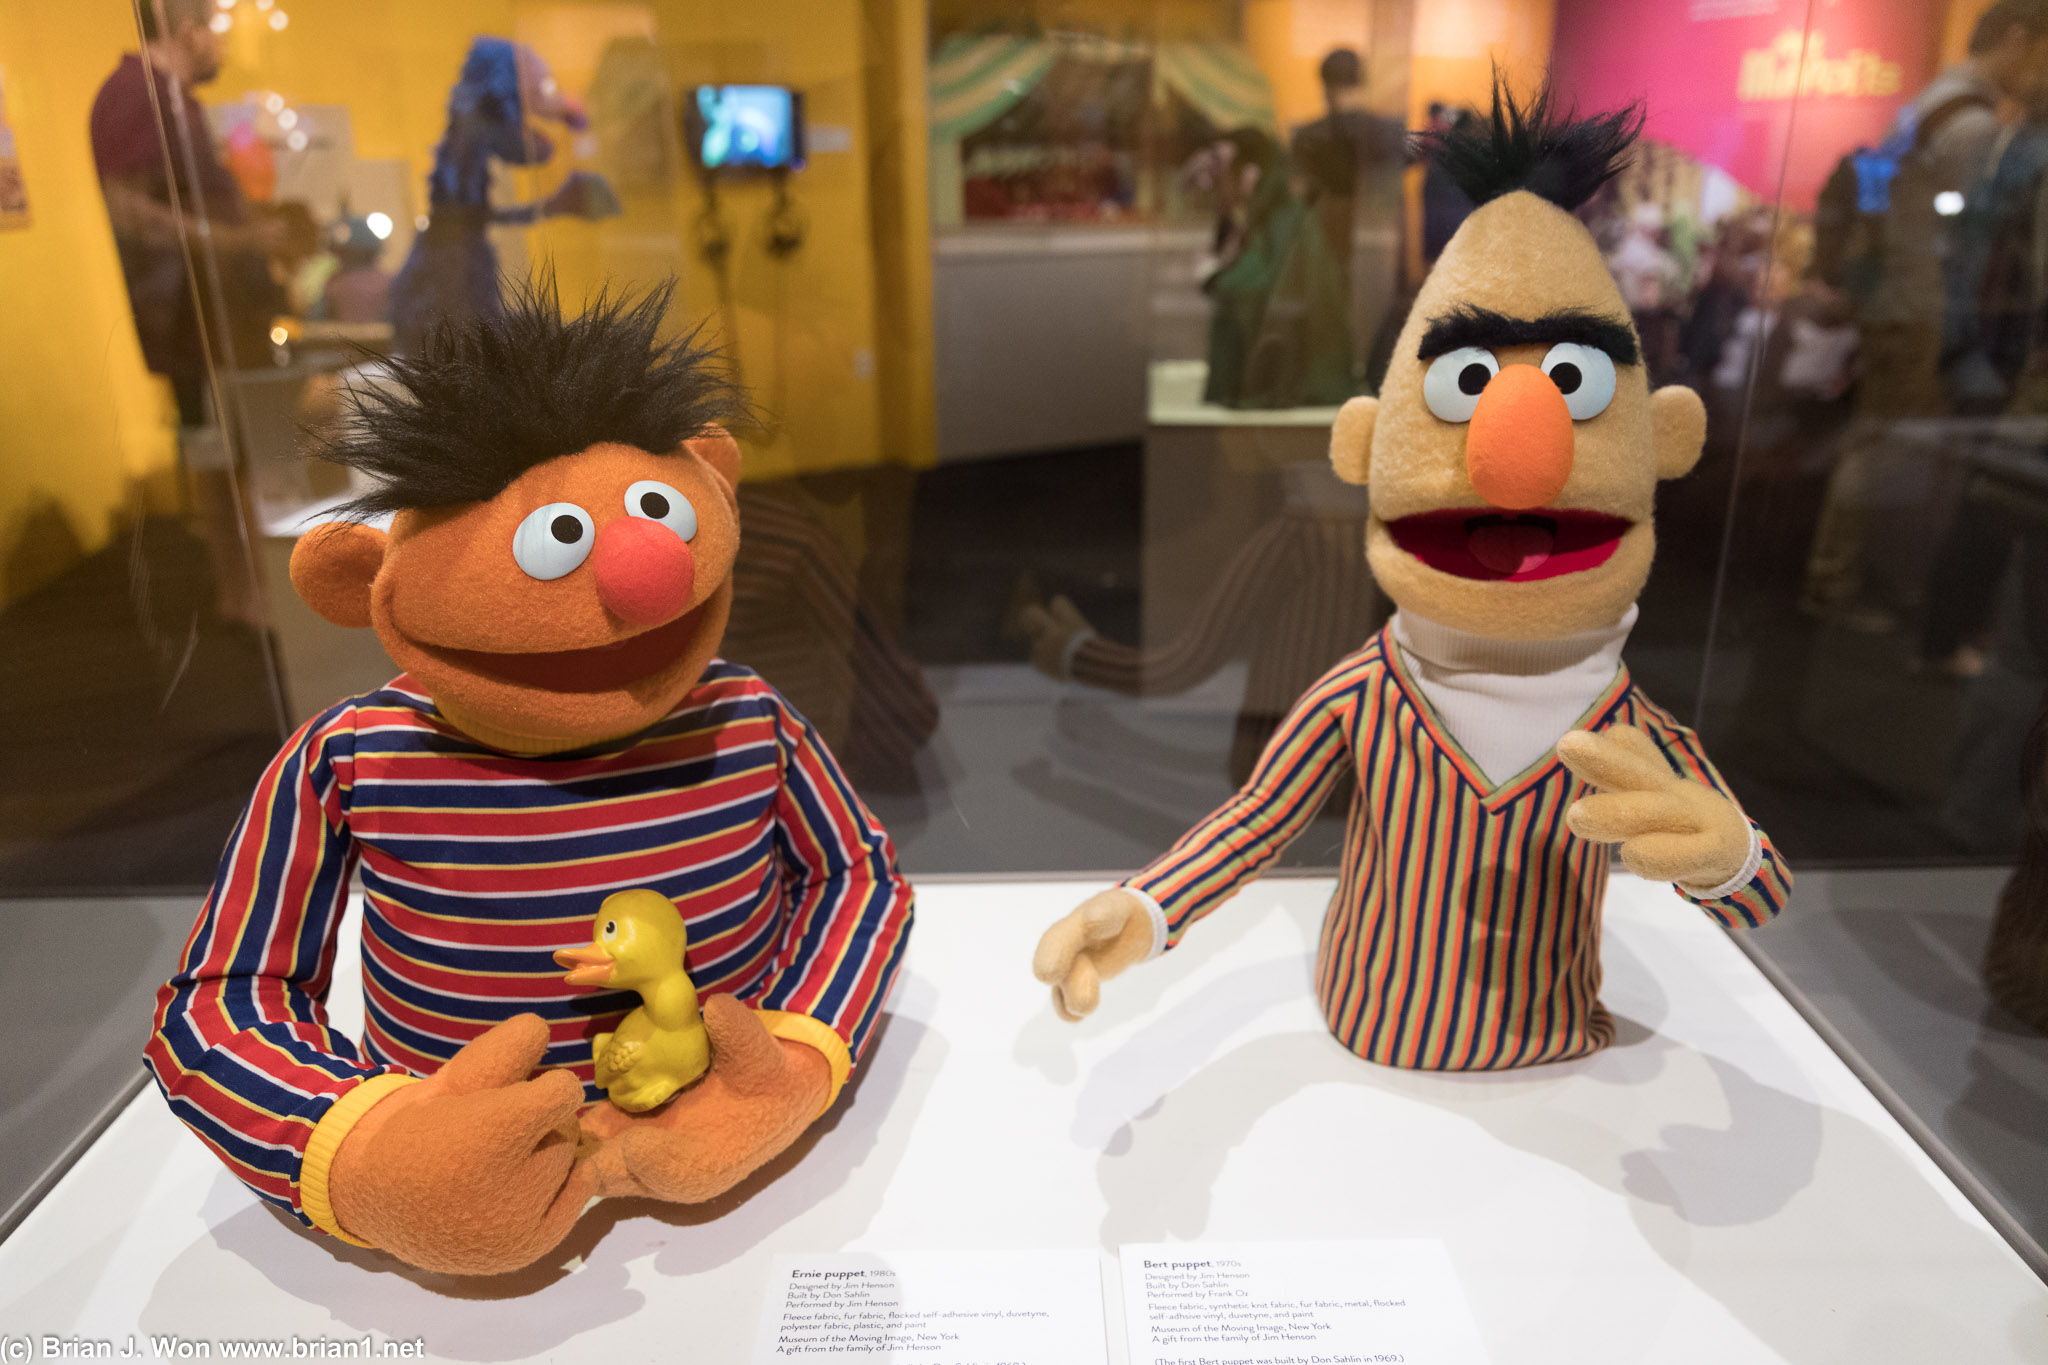 Ernie and Bert.